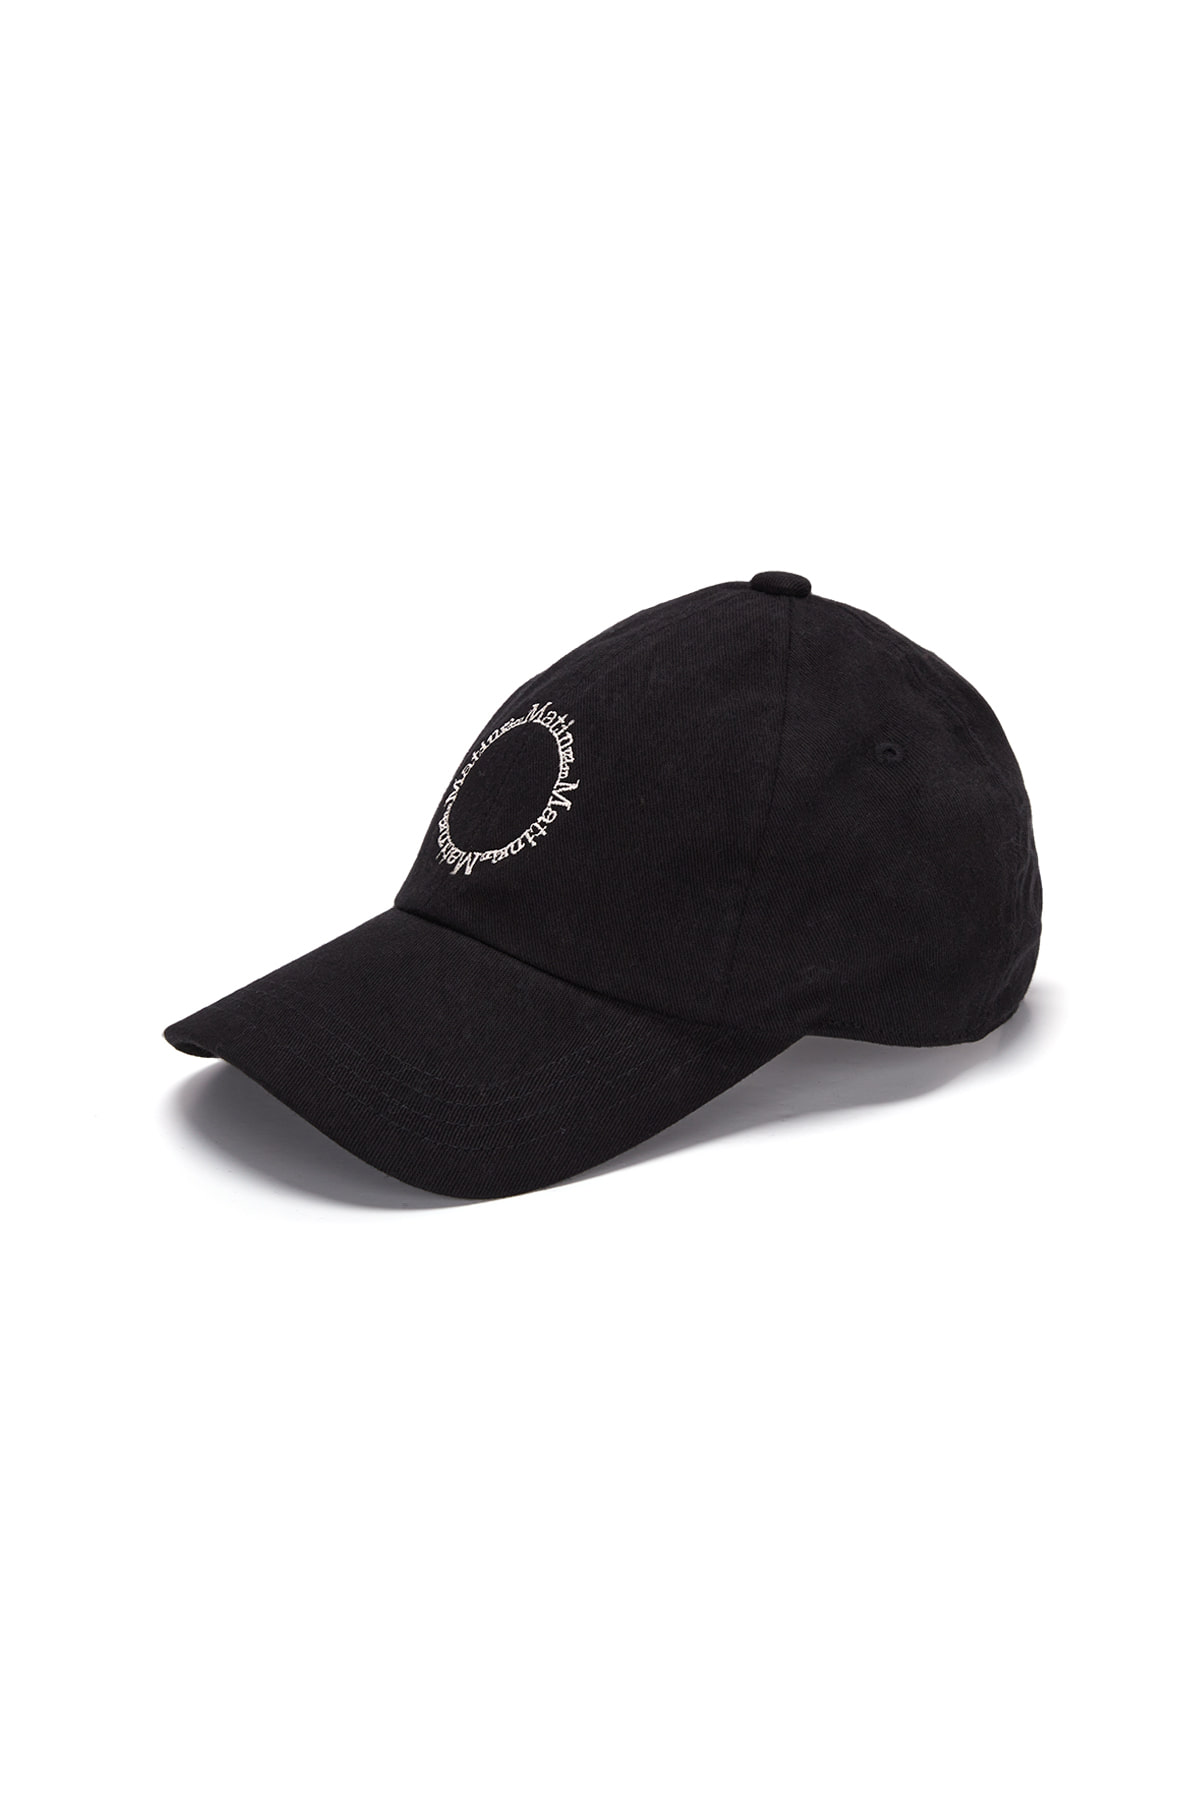 MACARON LOGO BALL CAP IN BLACK